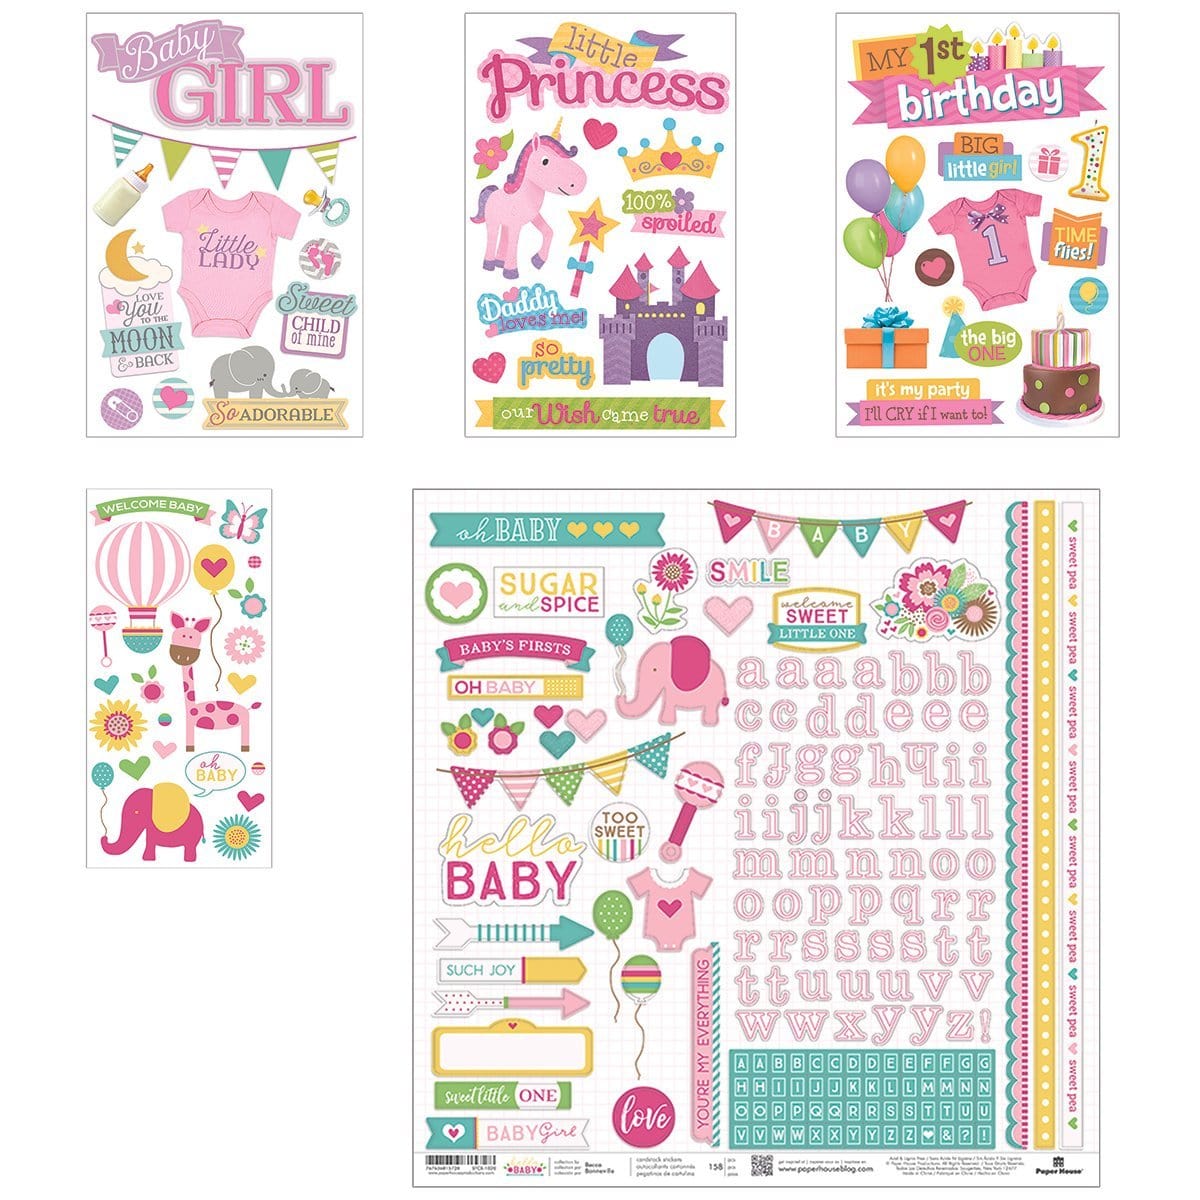 Cute Romantic Girl & Love Stickers Supplies Kit for Journaling,100 Sheets  Scrapbook Cartoon Decorative Stickers Decal Stickers Photo Planner Stickers